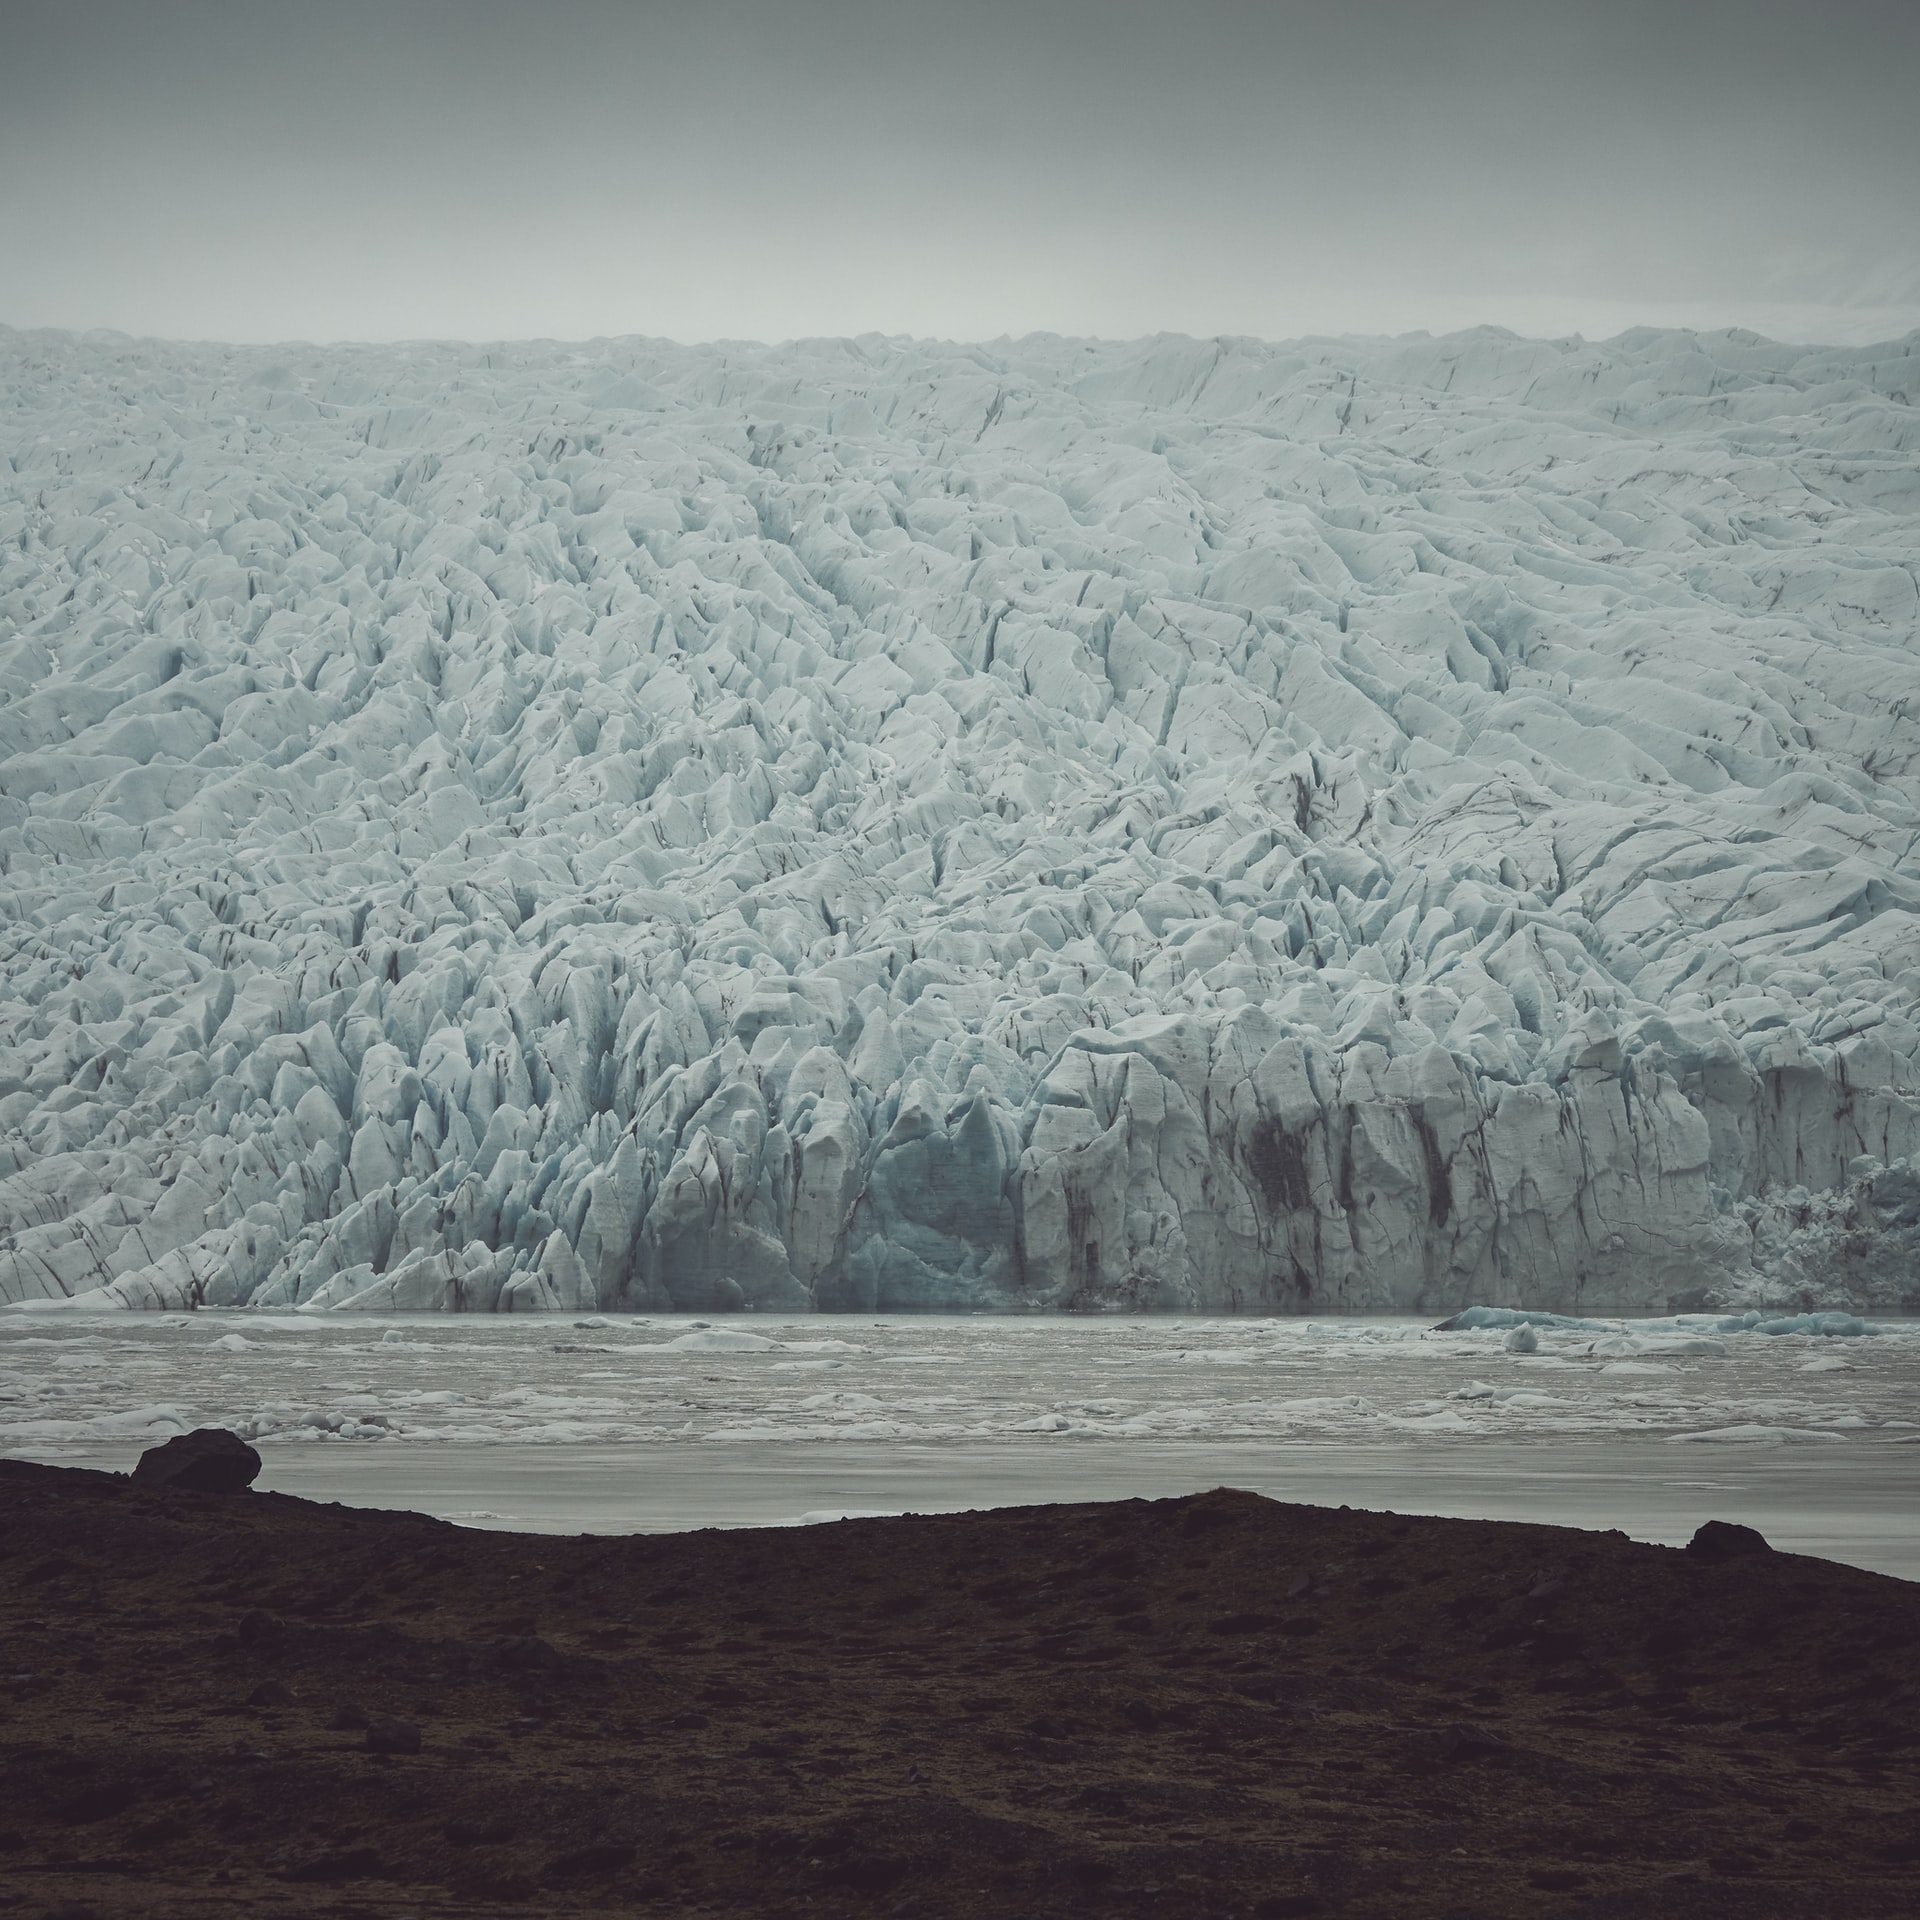 Vatnajokull Glacier in Iceland as a filming location